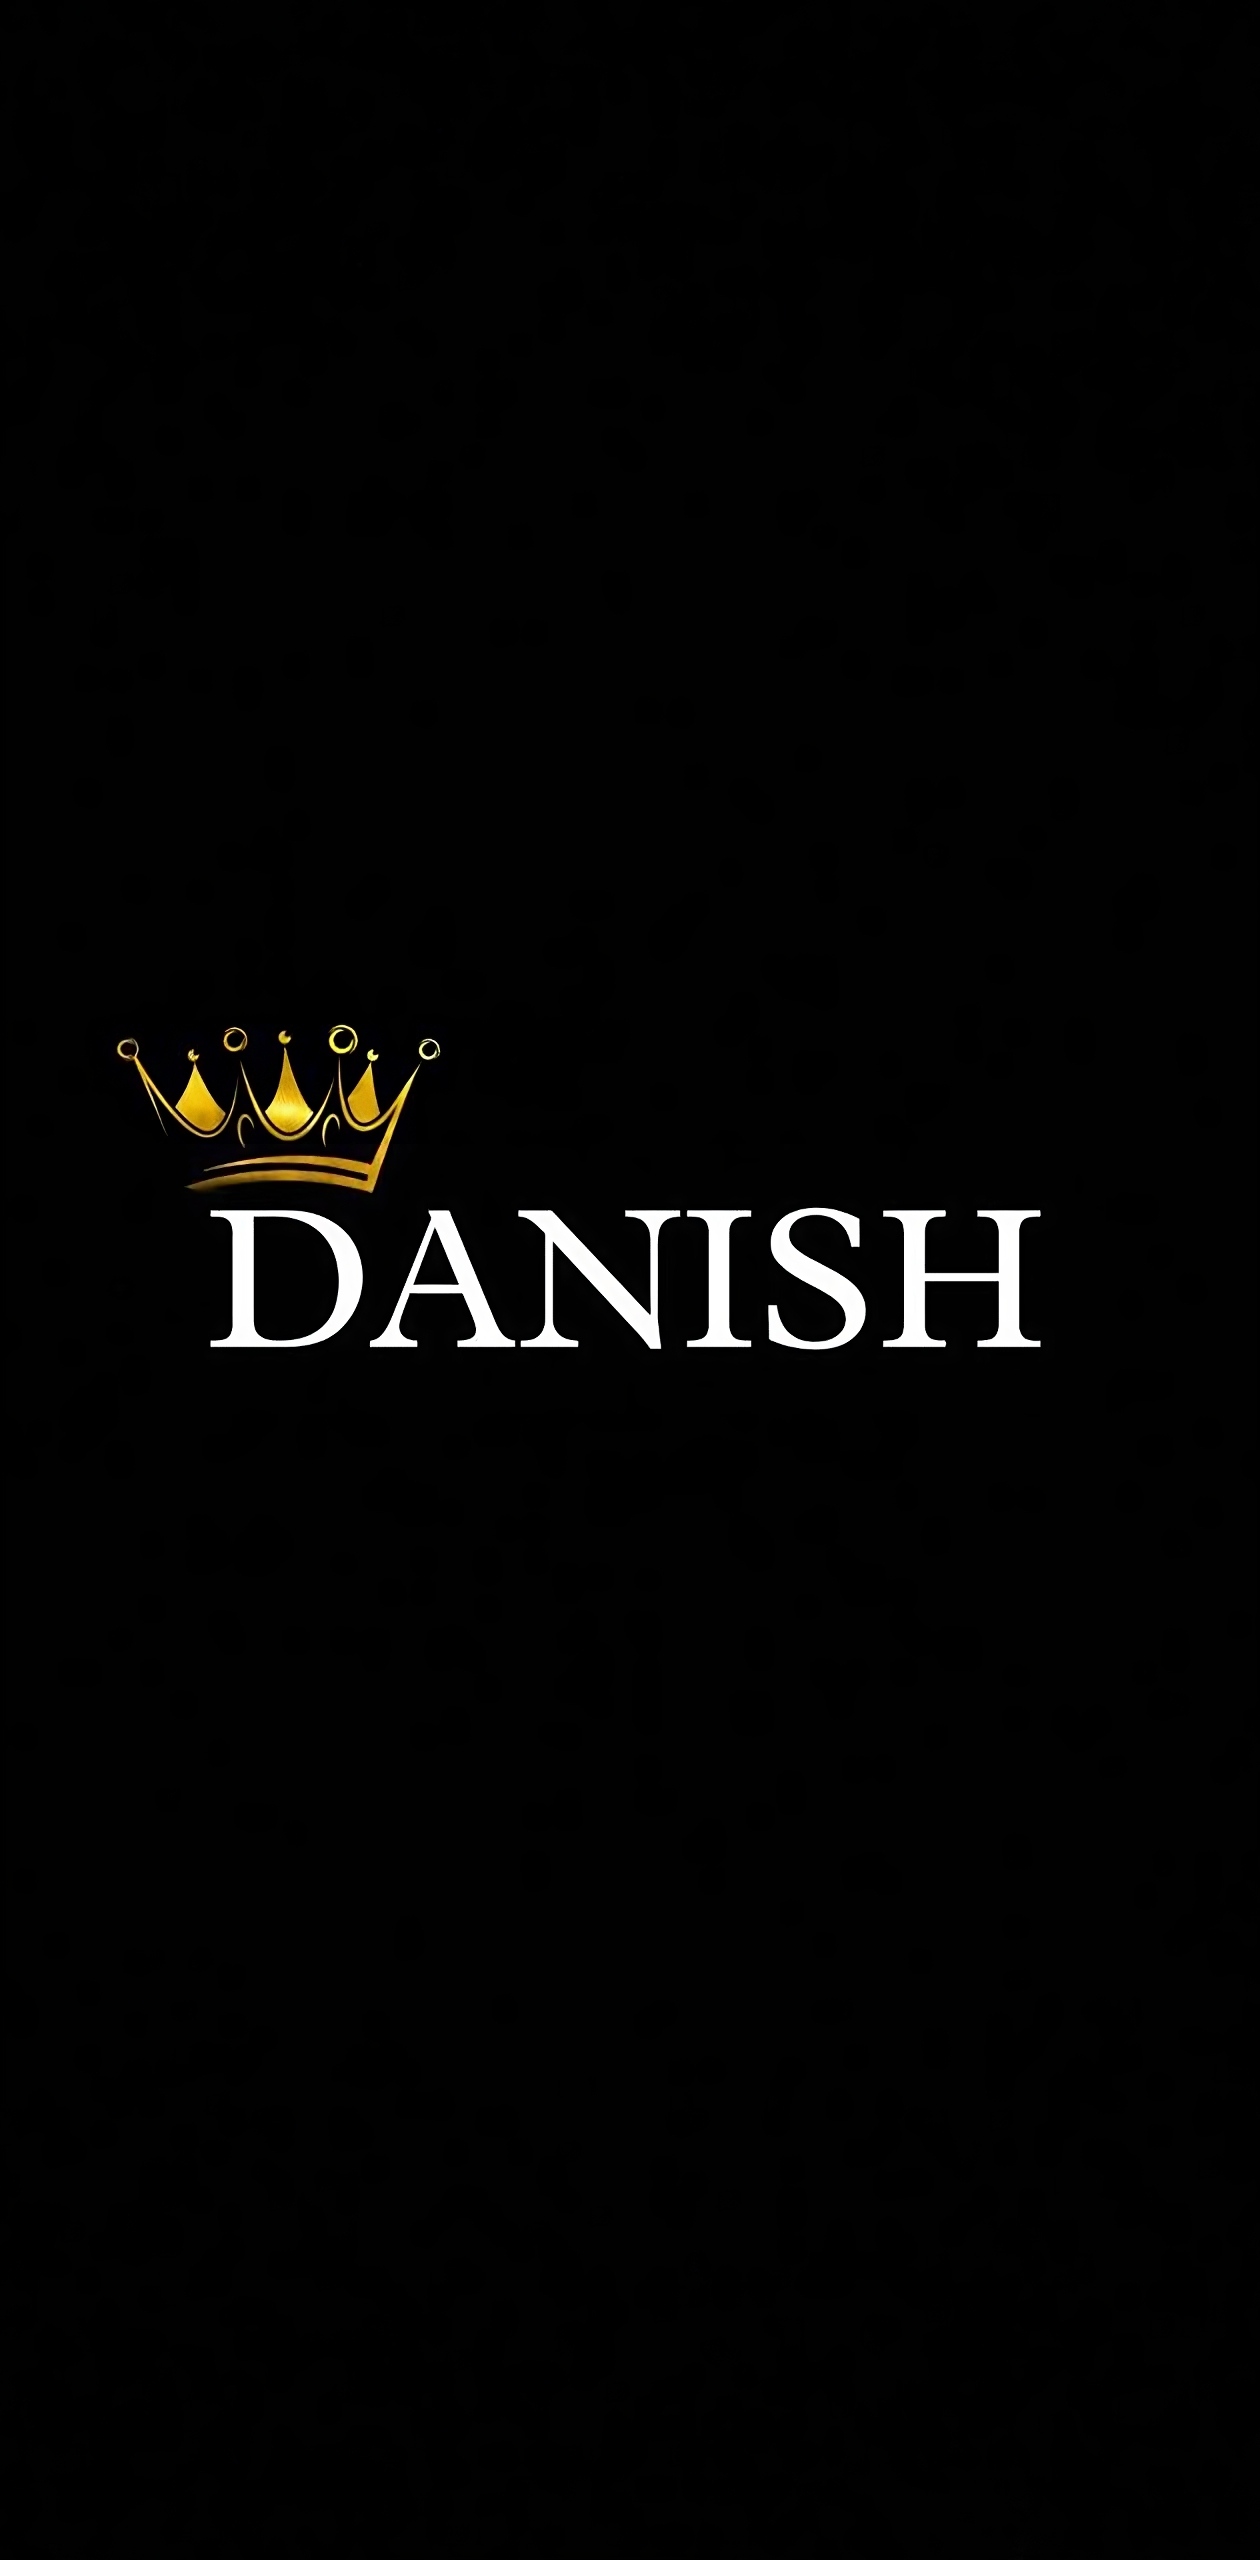 Danish Name - king